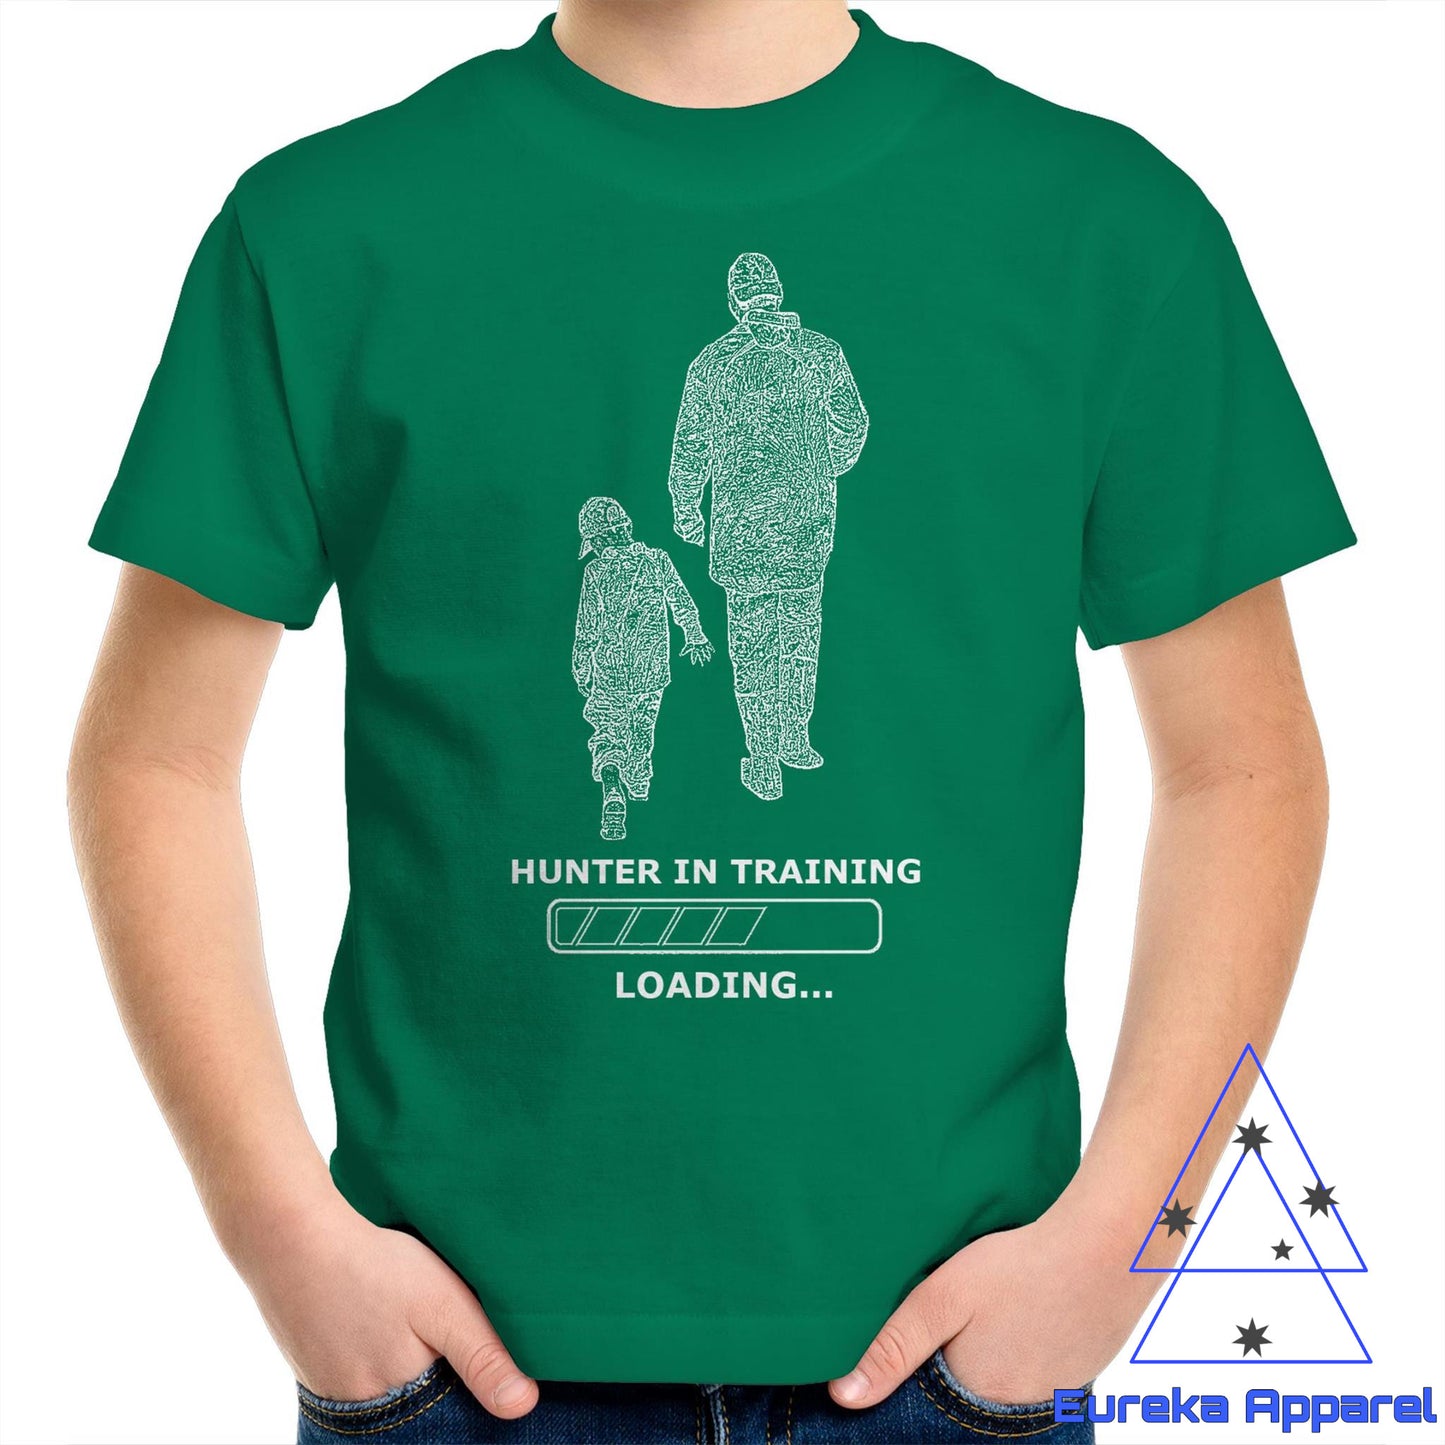 Hunter in Training. Loading... Kids Youth Crew T-Shirt